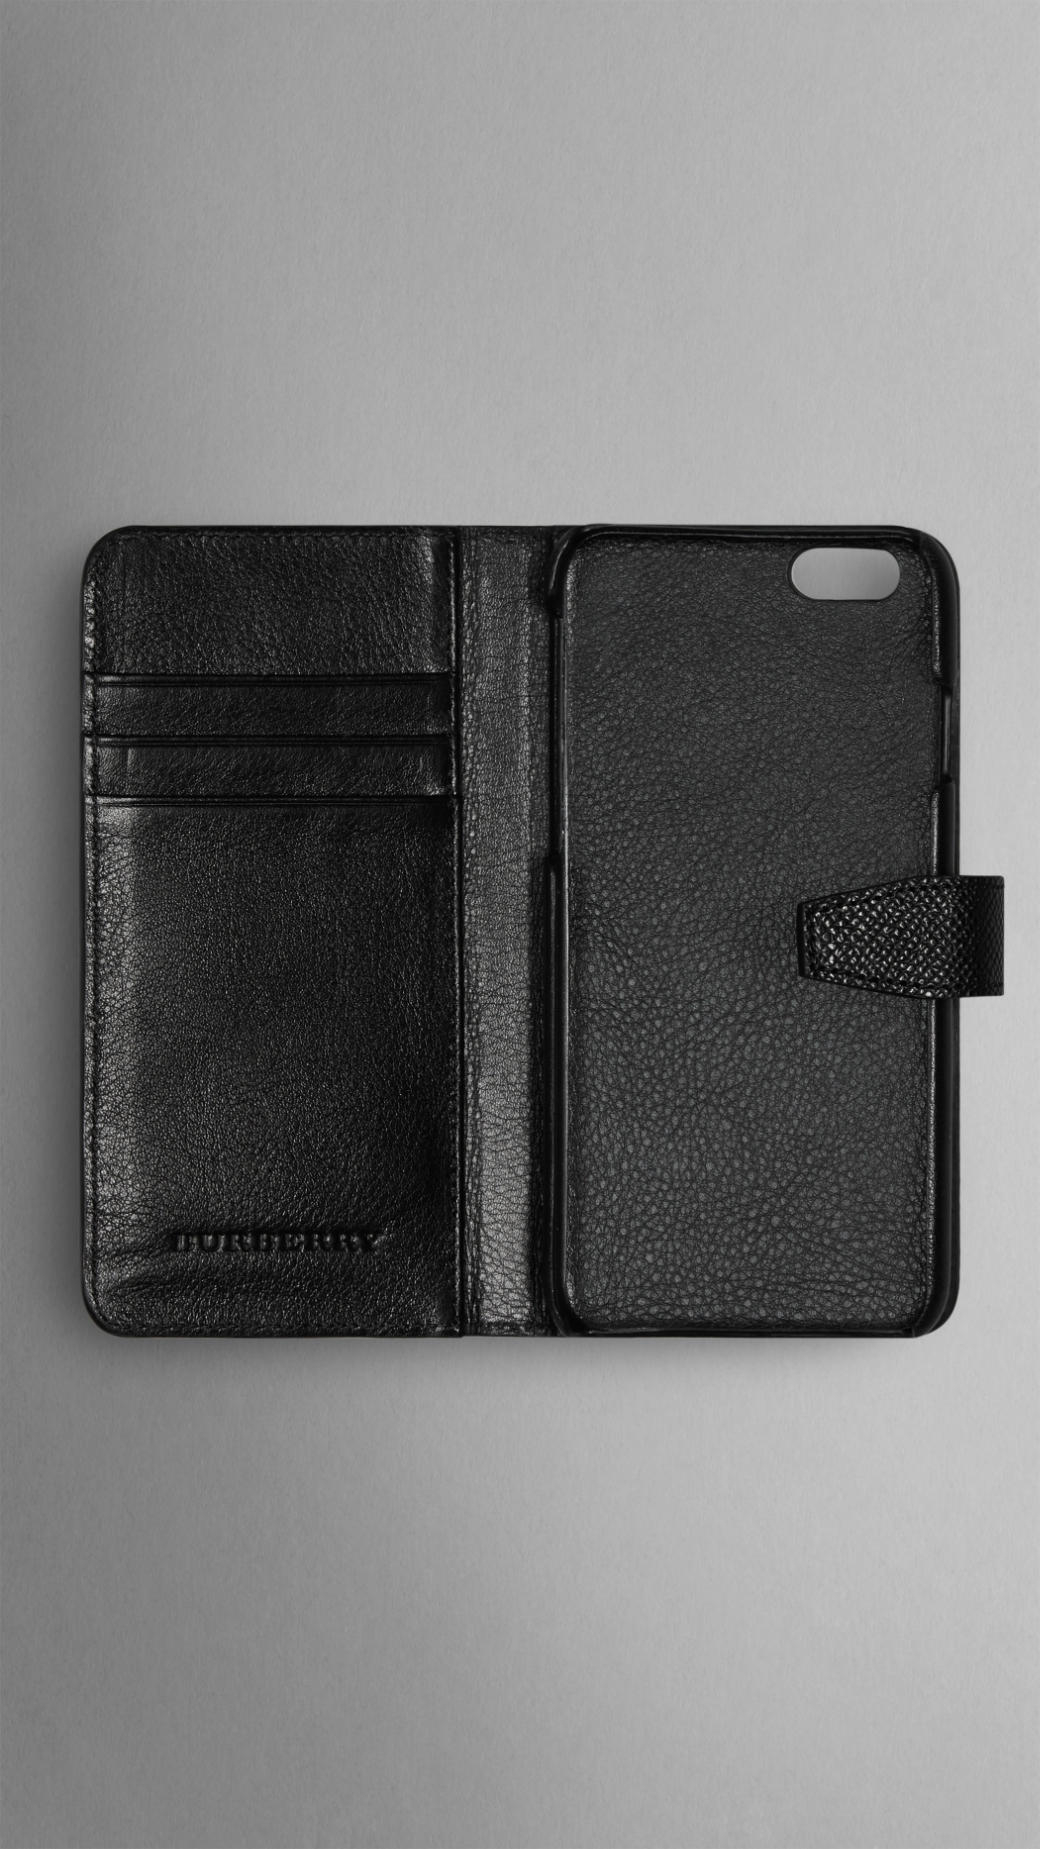 burberry iphone 6 plus wallet case